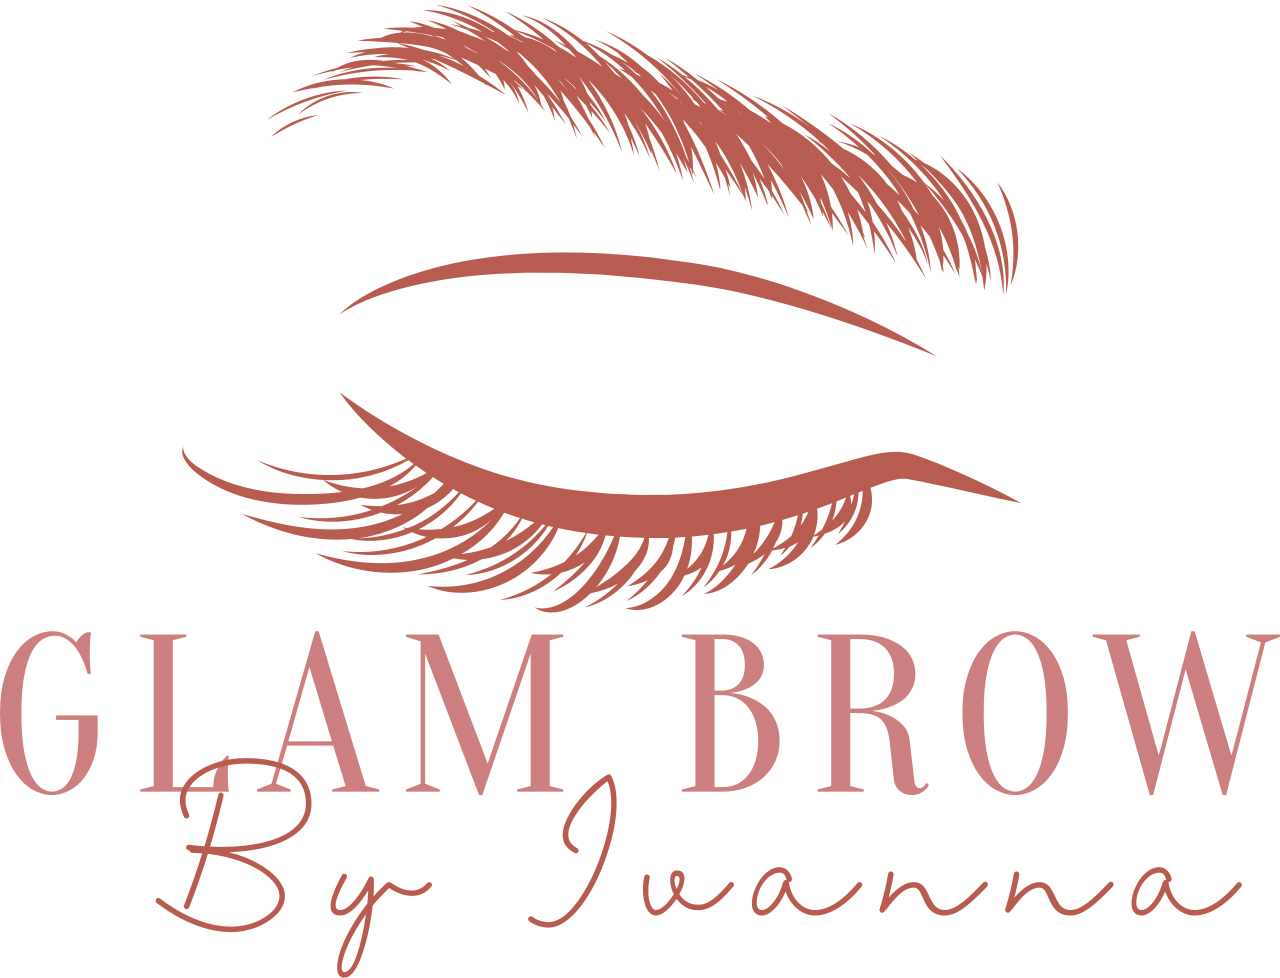 GLAM BROW's logo